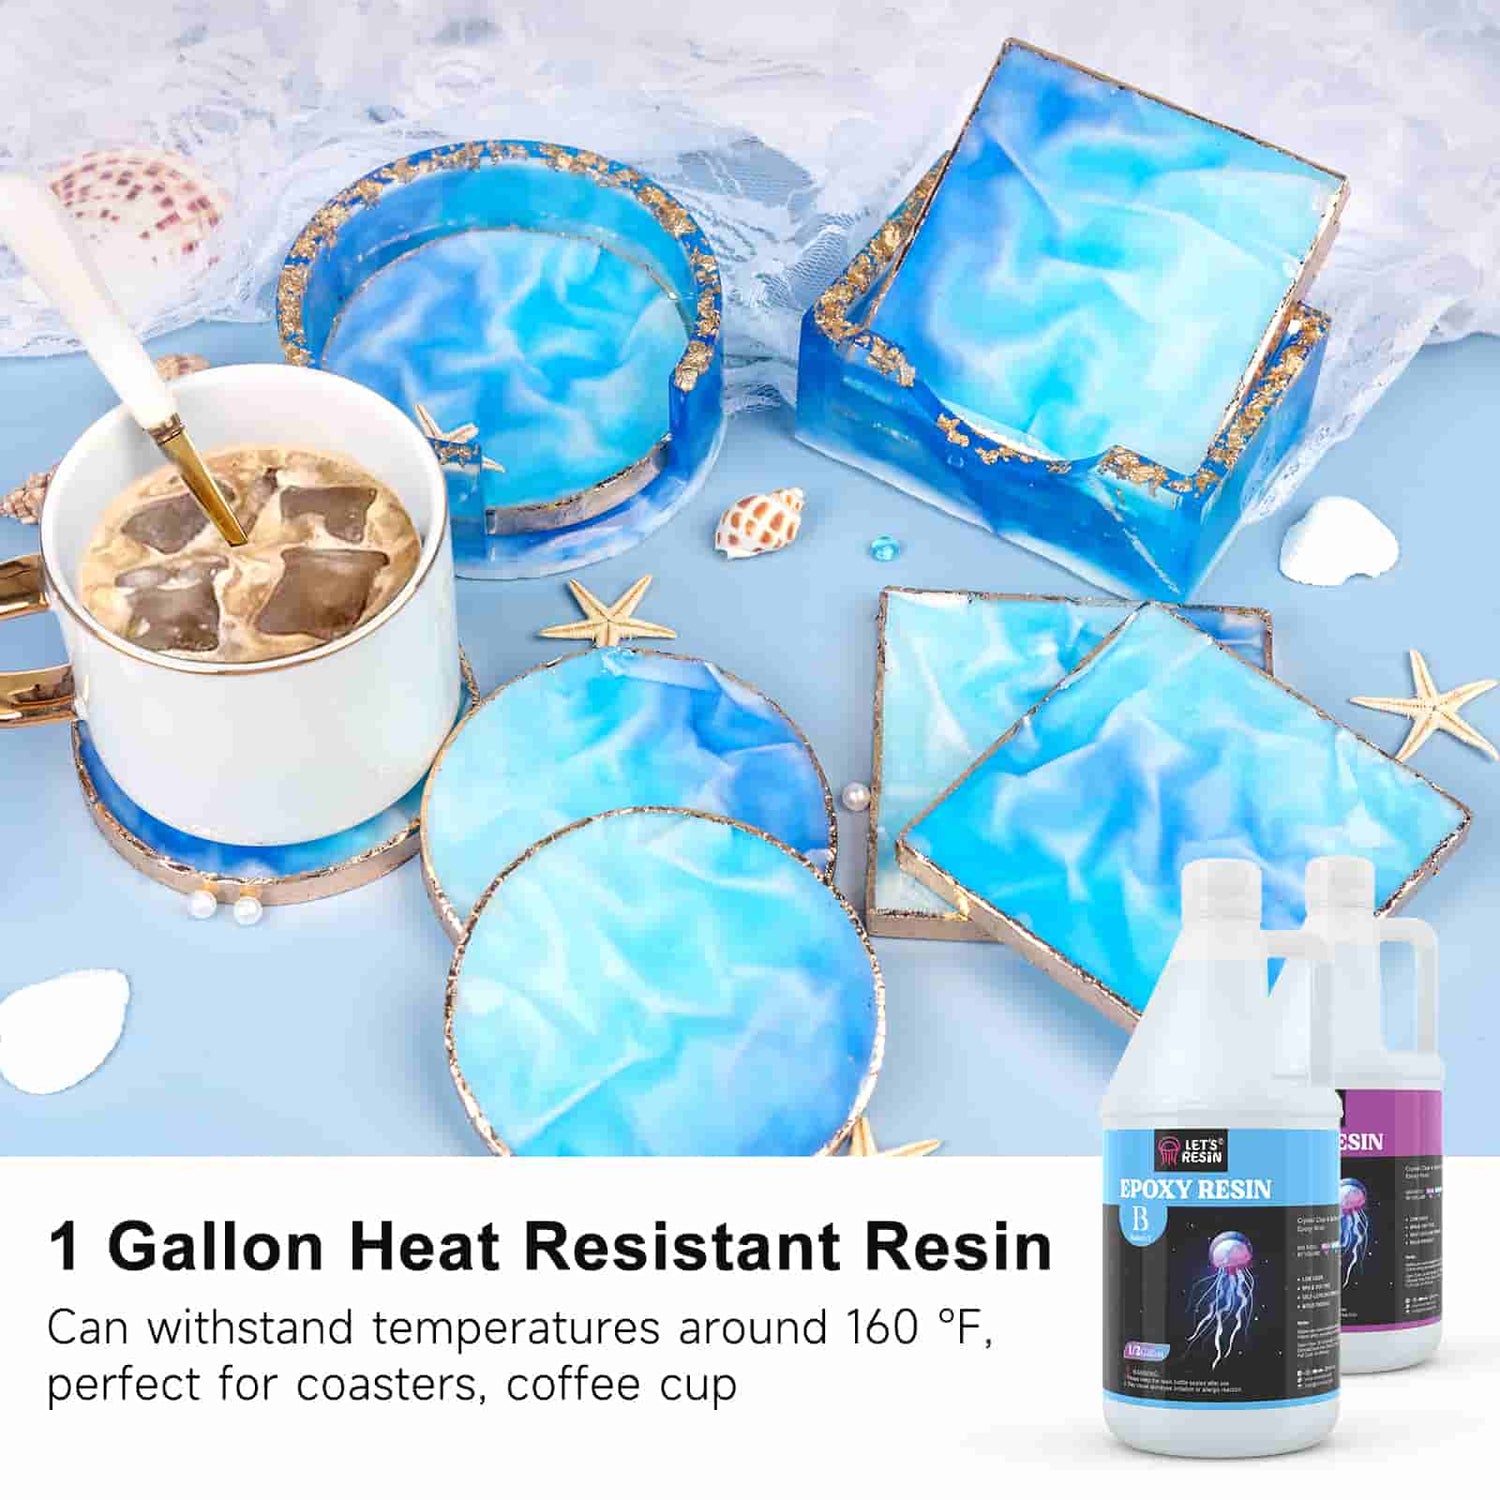 1 Gallon Epoxy Resin Kit - Bubbles Free Jewlery Casting,Gallon of